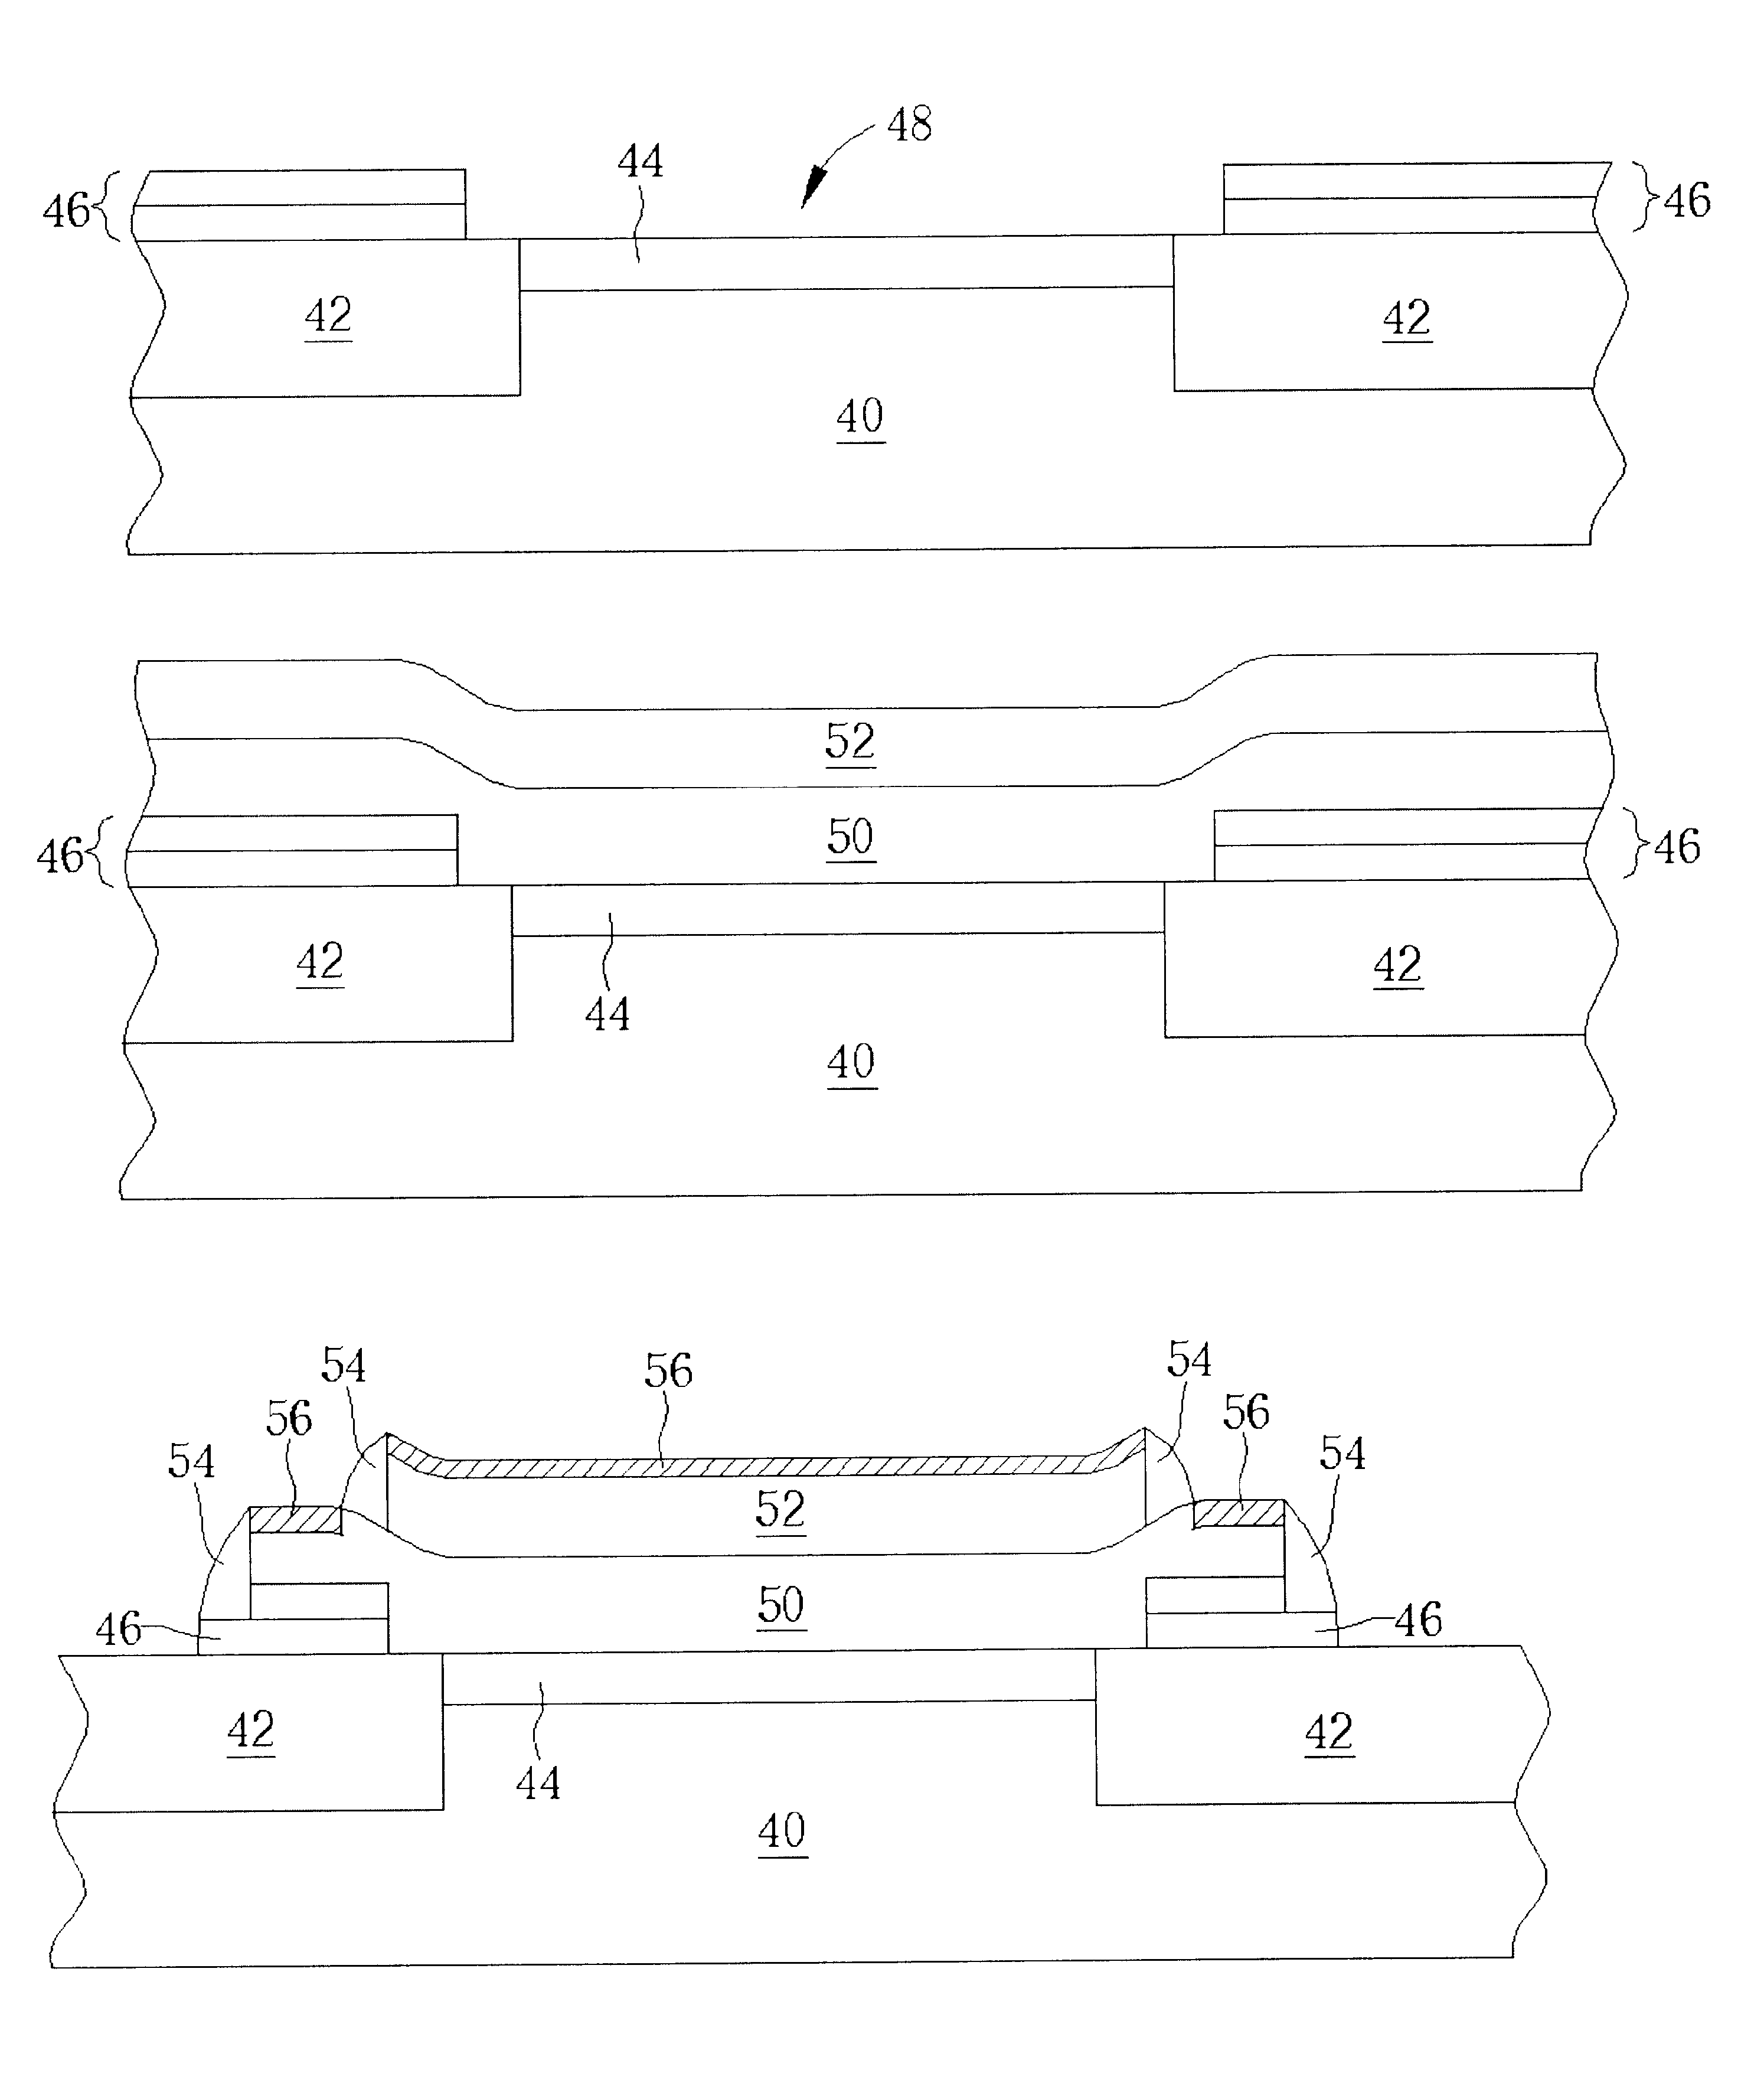 Method of fabricating a bipolar junction transistor